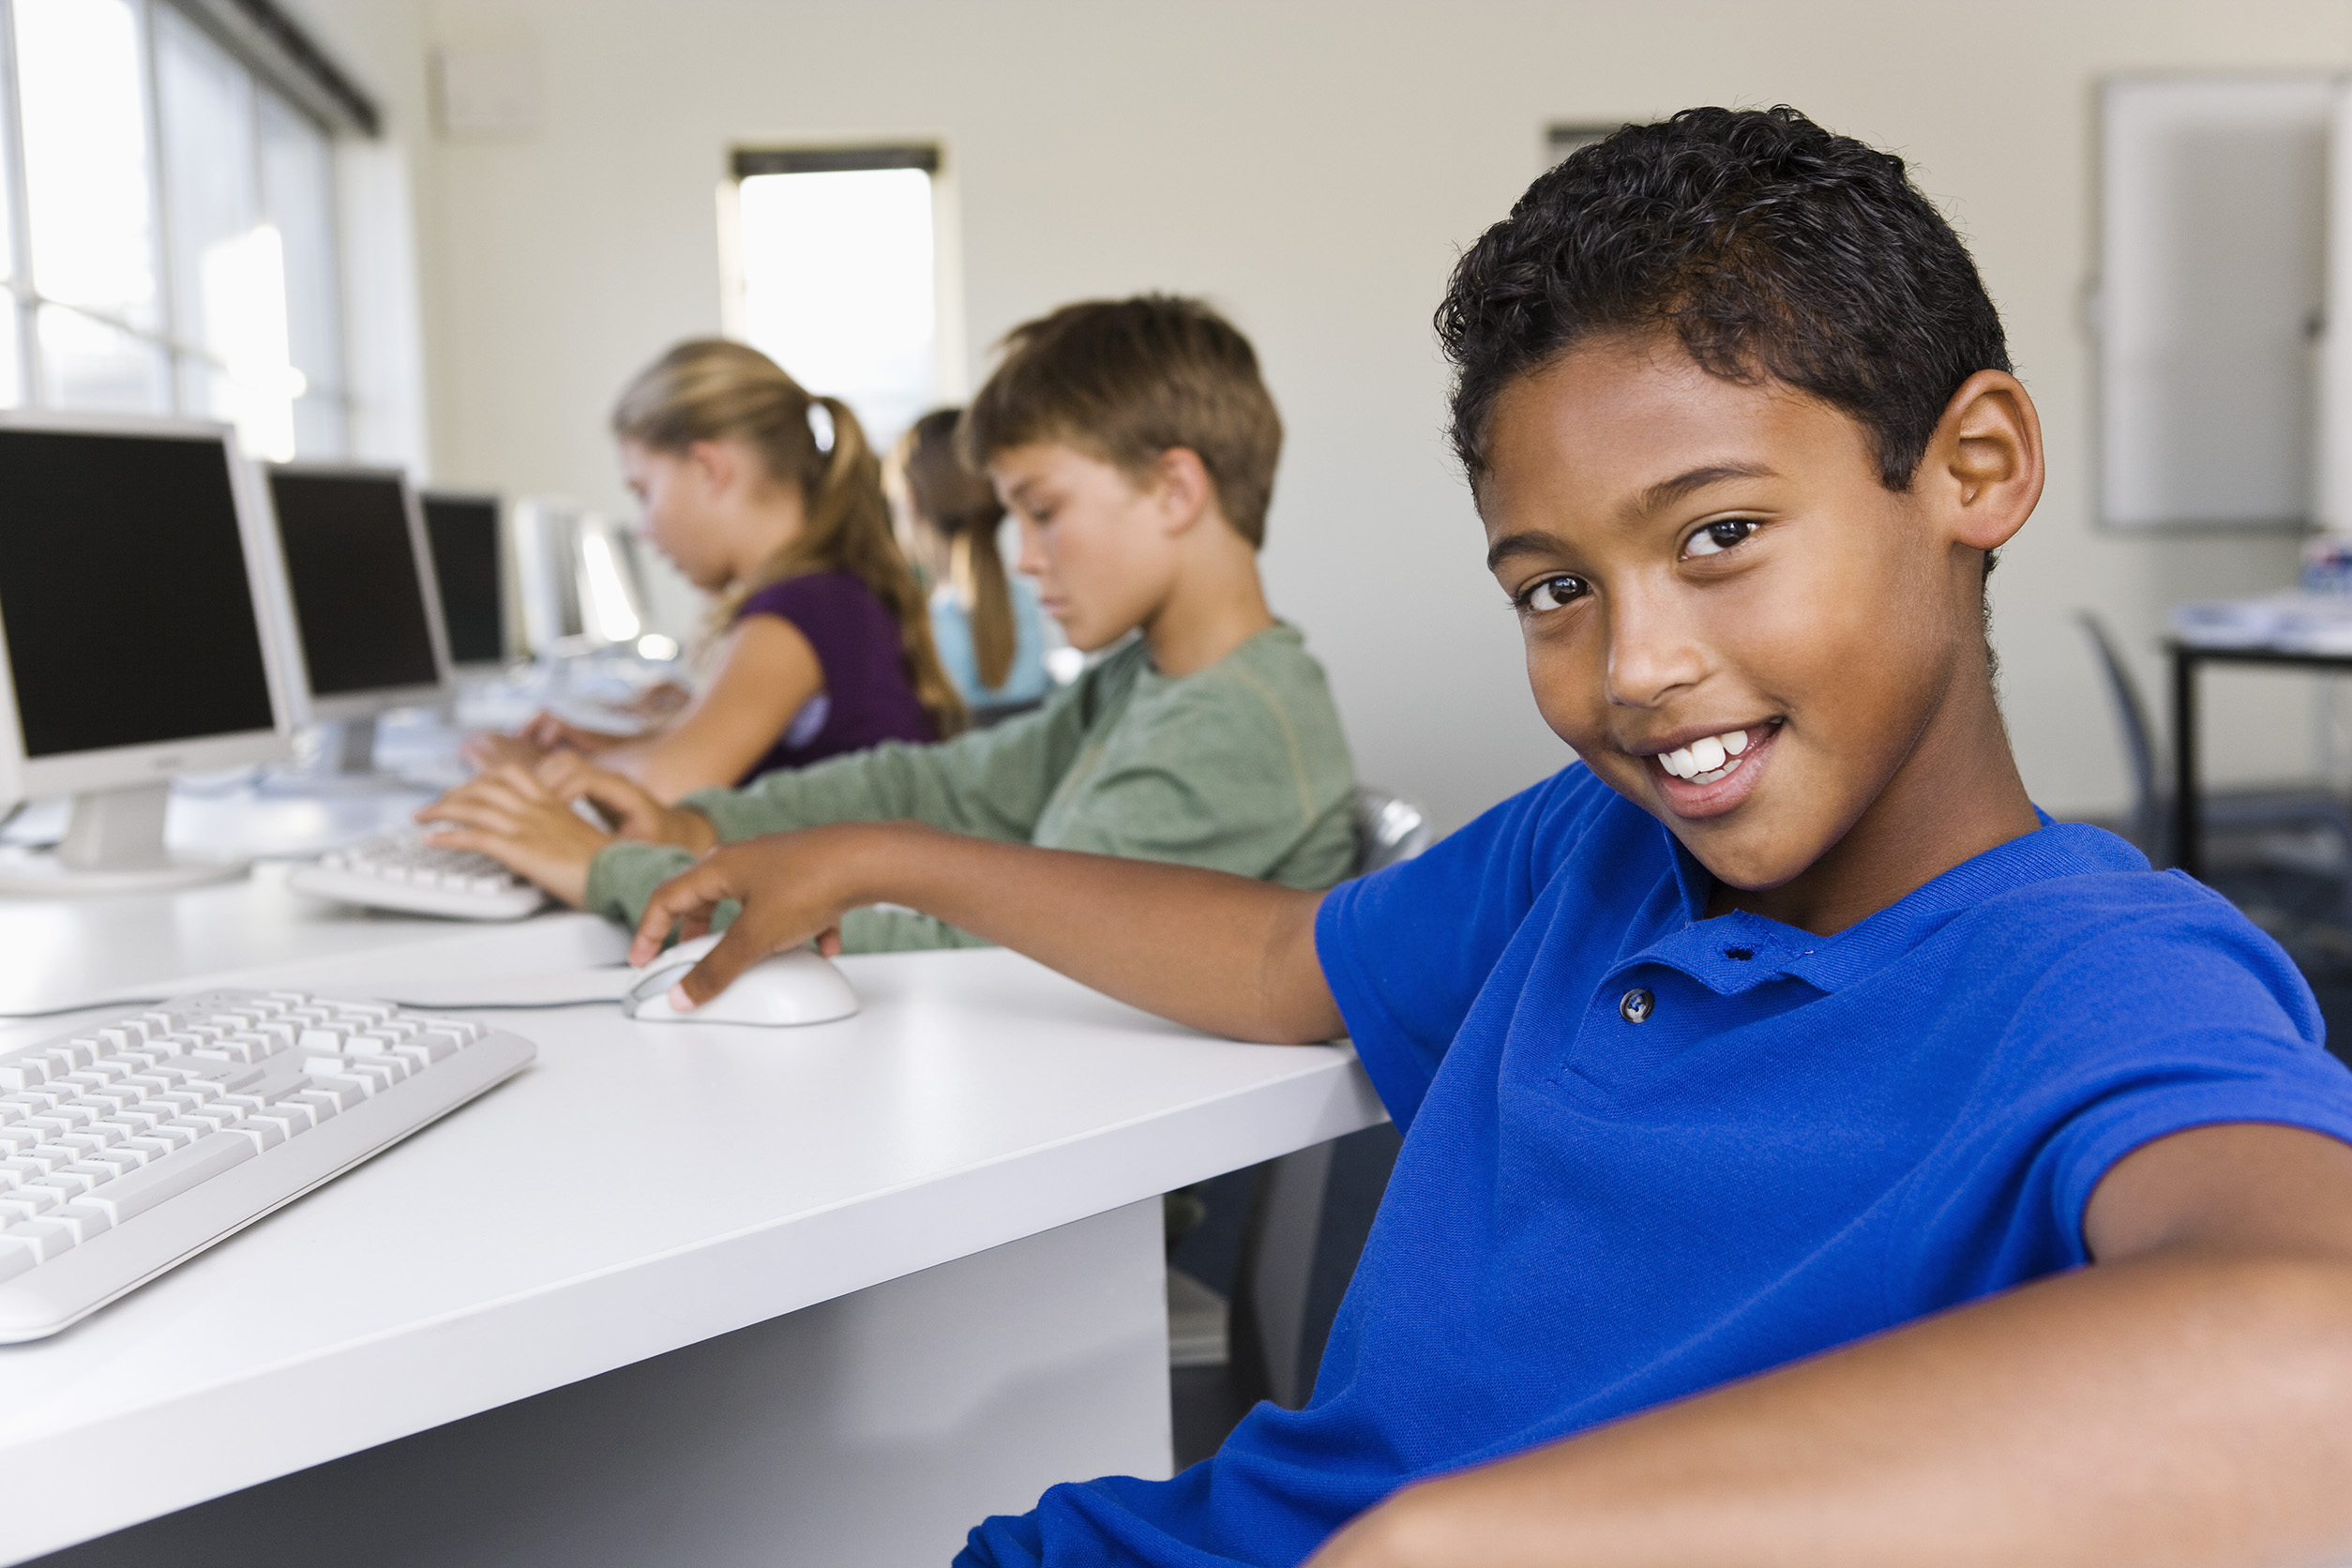 Getting new skills. It Kids. Information Technology is Kids. Using Technologies for Kids. It Schools 3d.